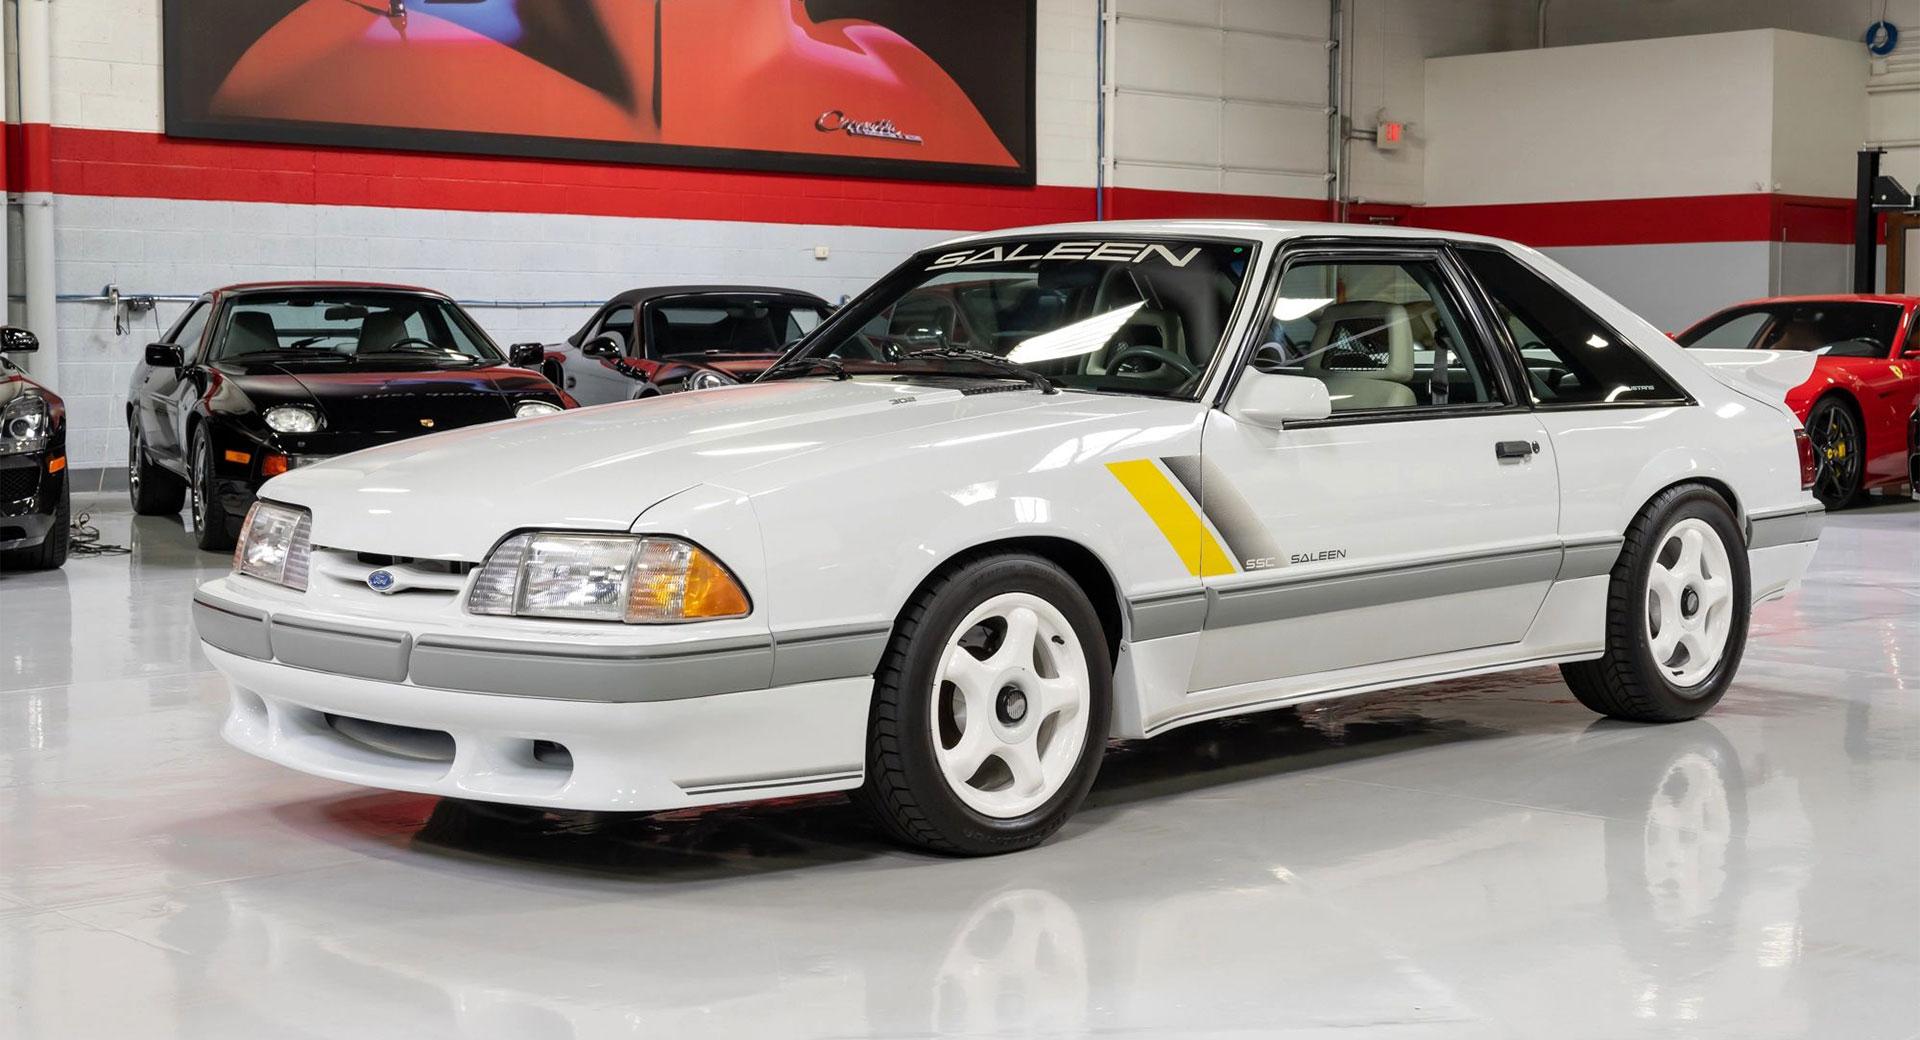 La Saleen SSC de 1989 est l’ultime Ford Mustang Foxbody